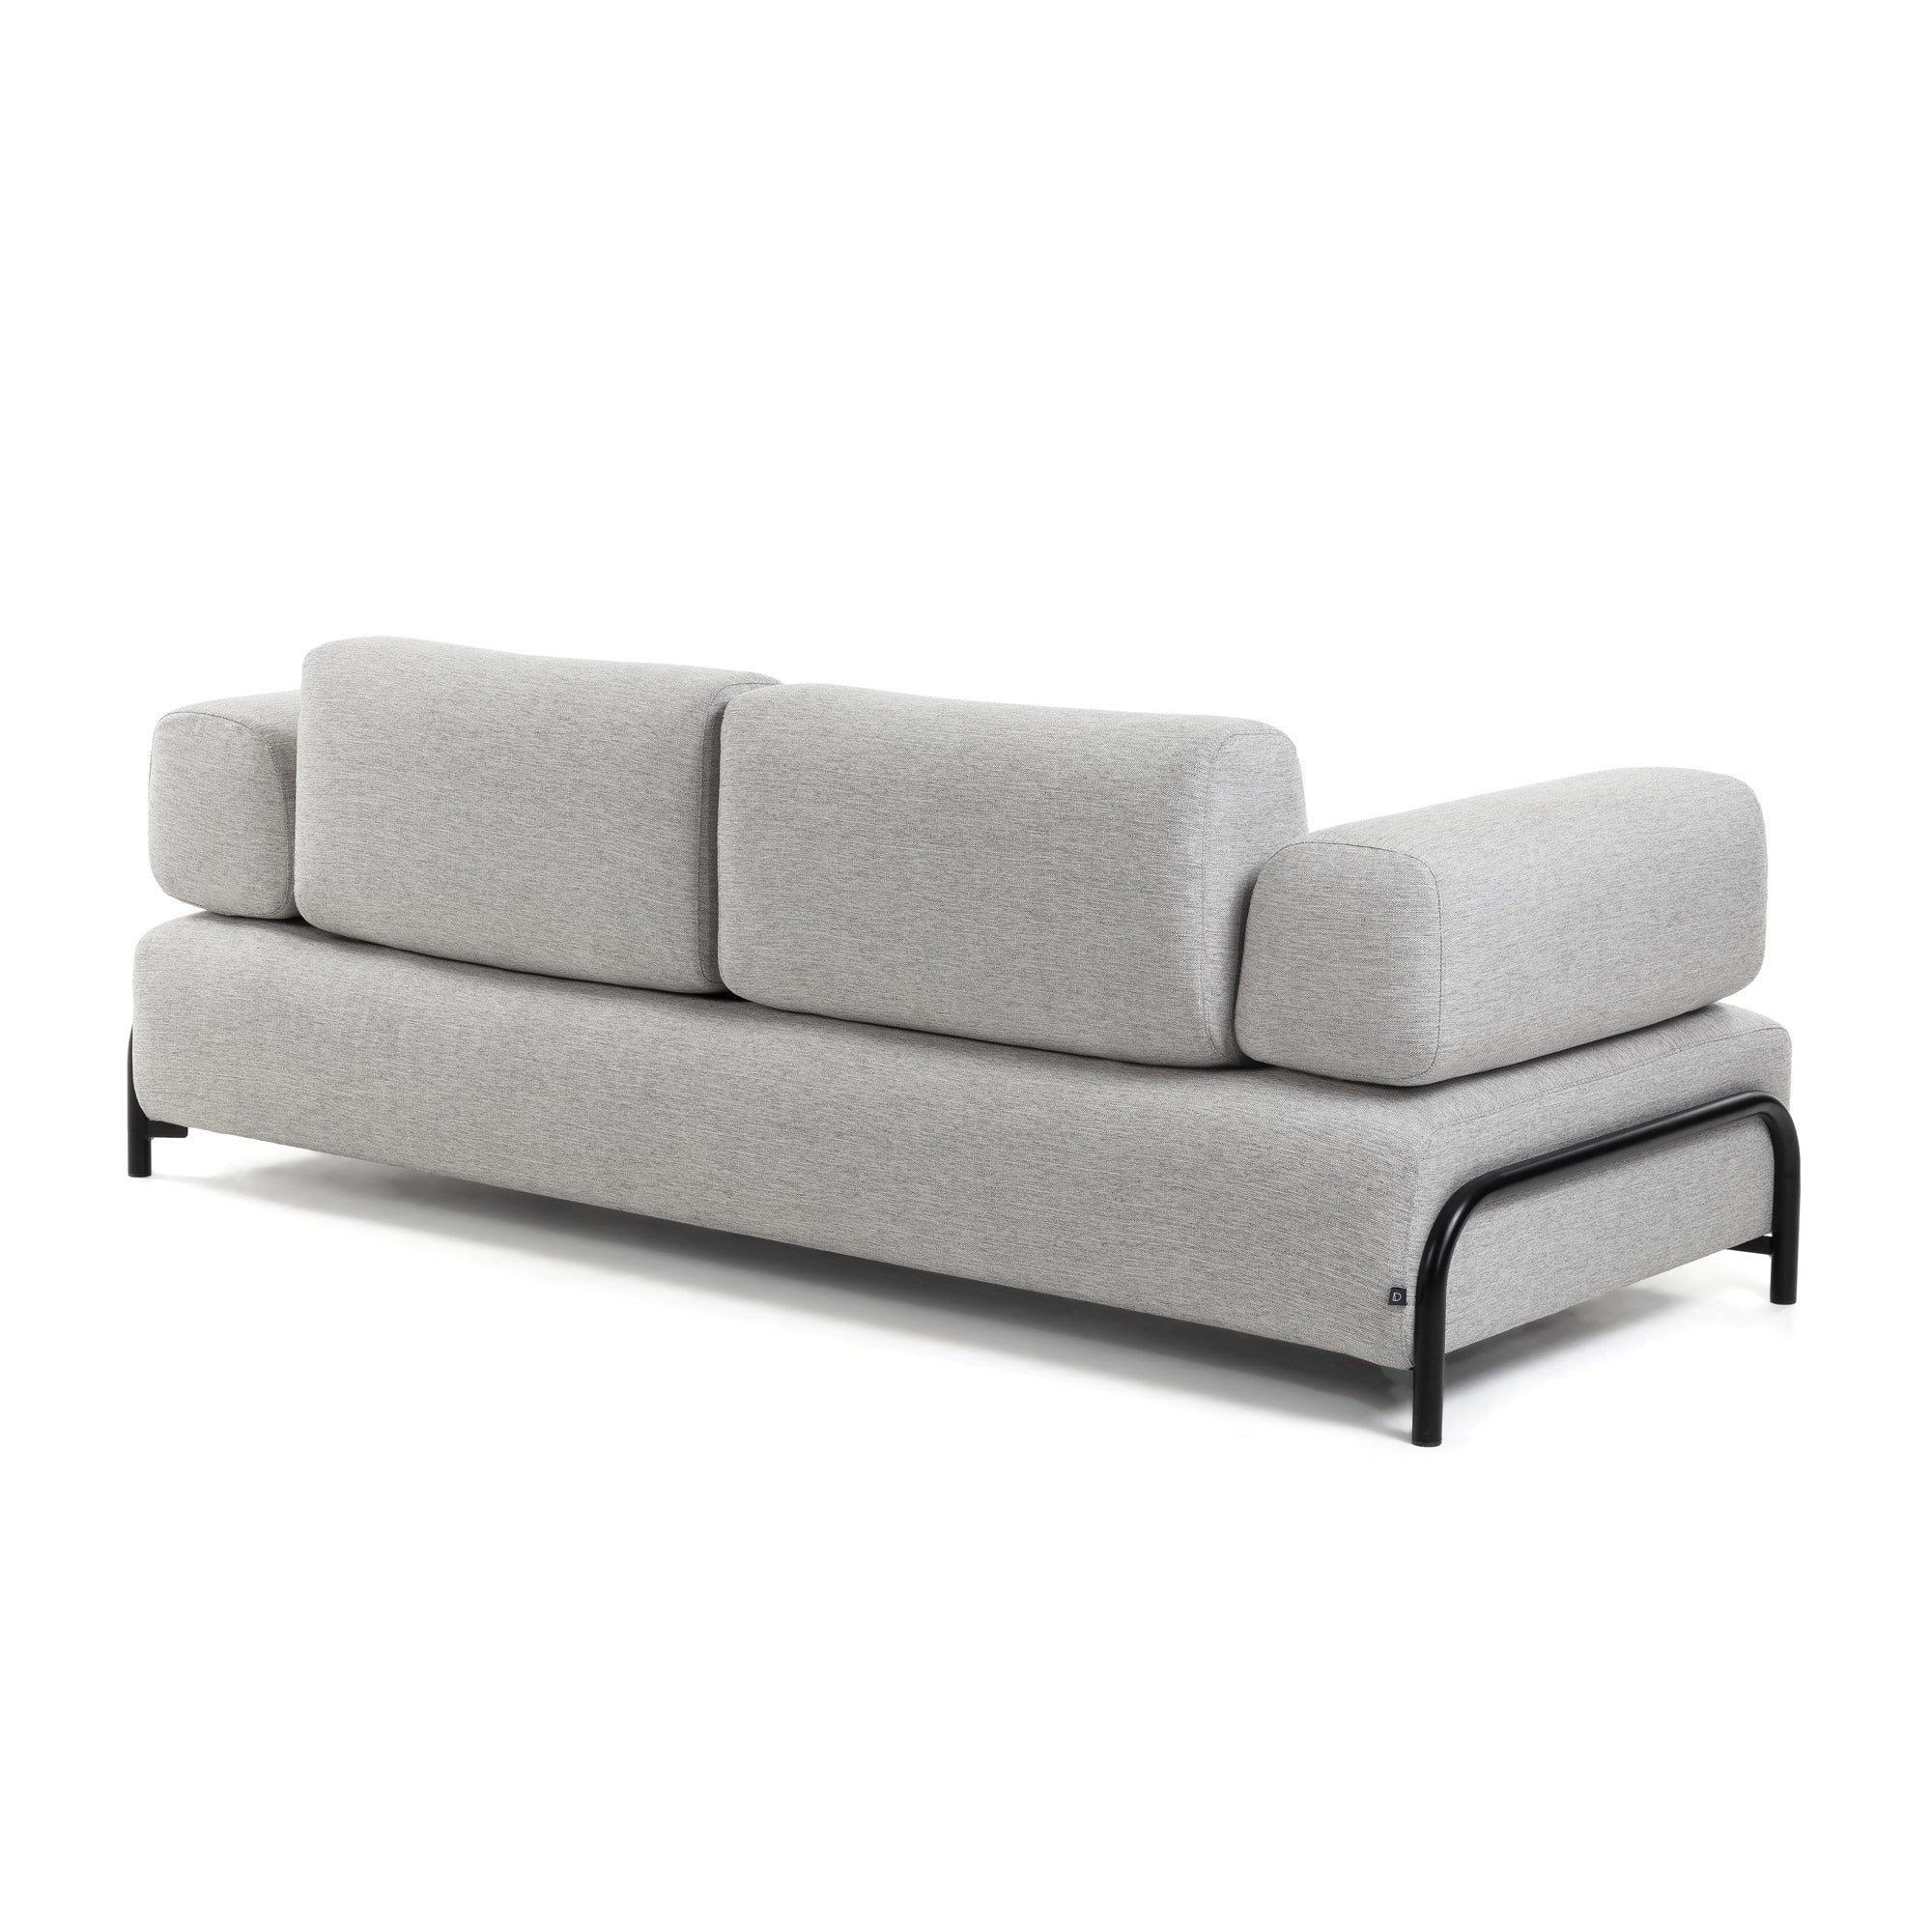 Compo 3 seater sofa in light grey, 232 cm